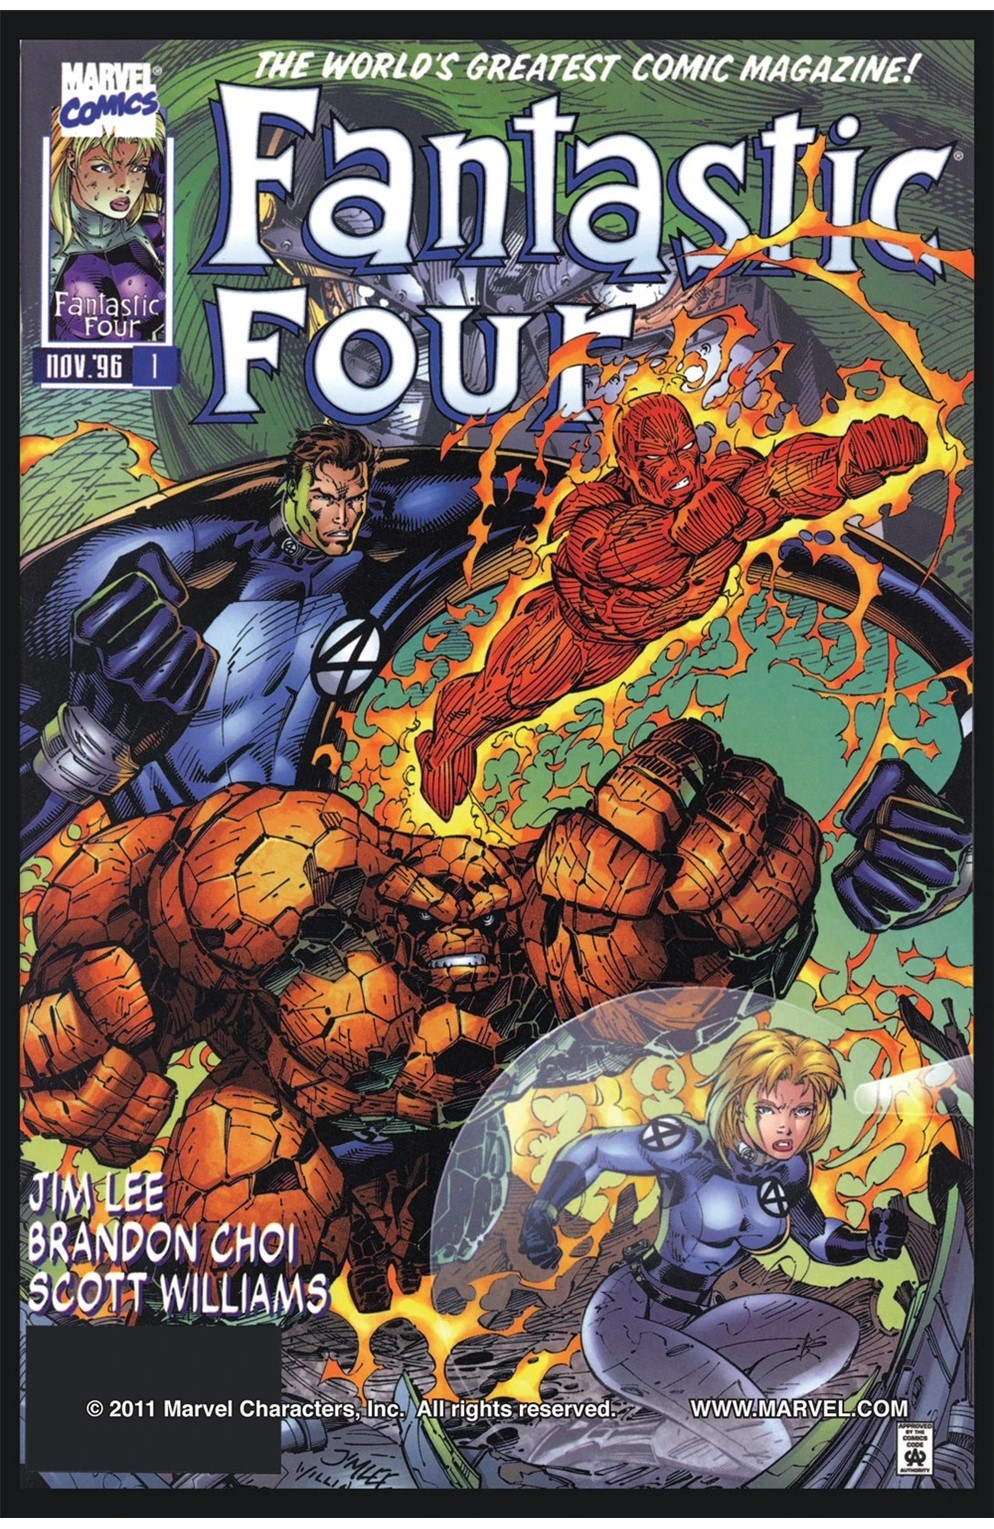 Fantastic Four Volume 2 Full Series Bundle Issues 1-13